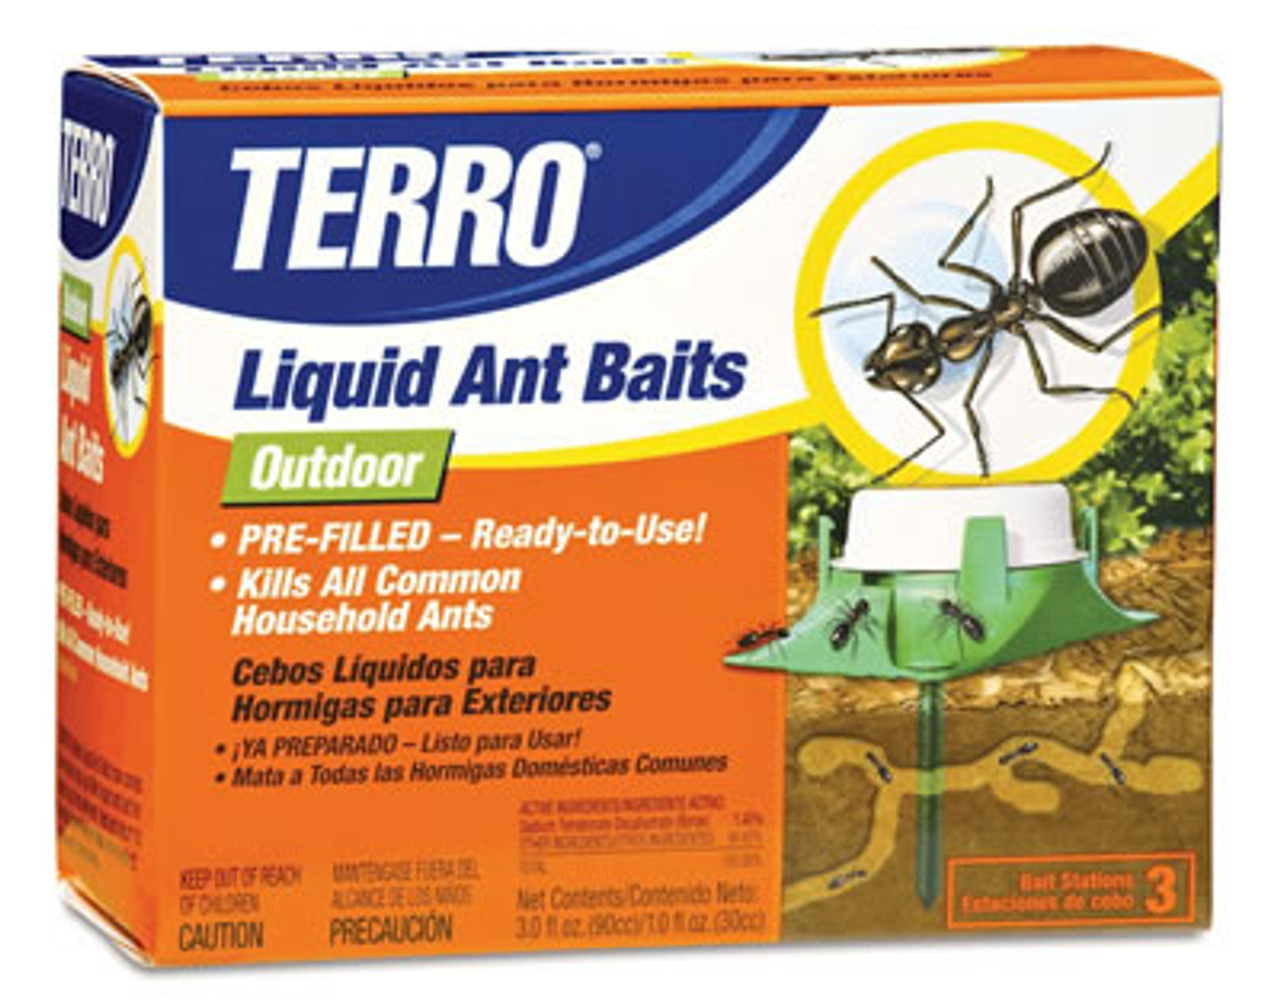 Terro Outdoor Liquid Ant Bait - CountryMax